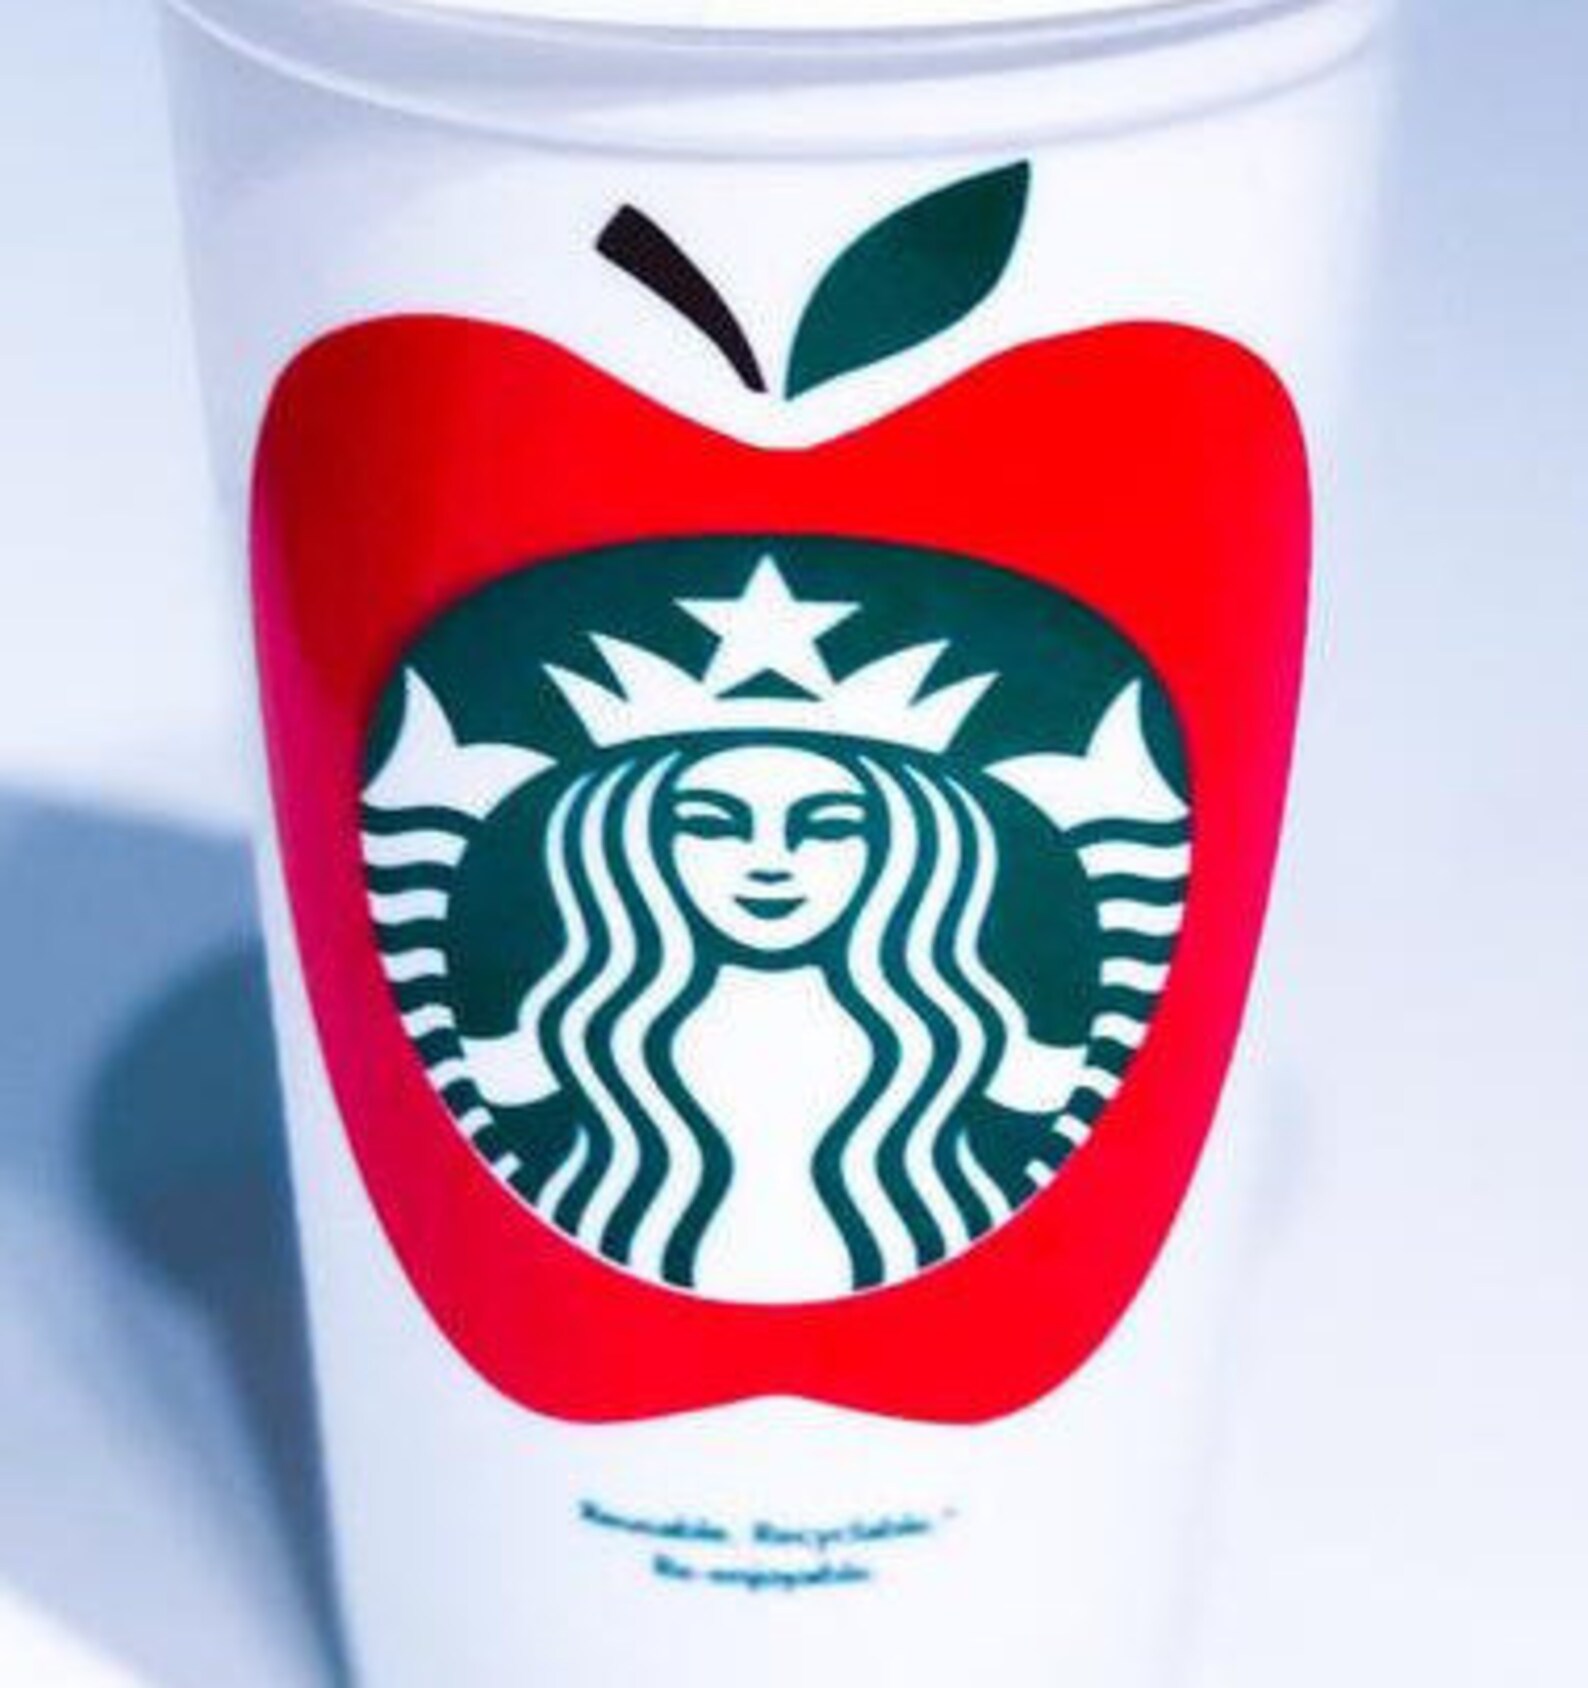 Apple Starbucks Coffee SVG File Silhouette or Cricut Cut